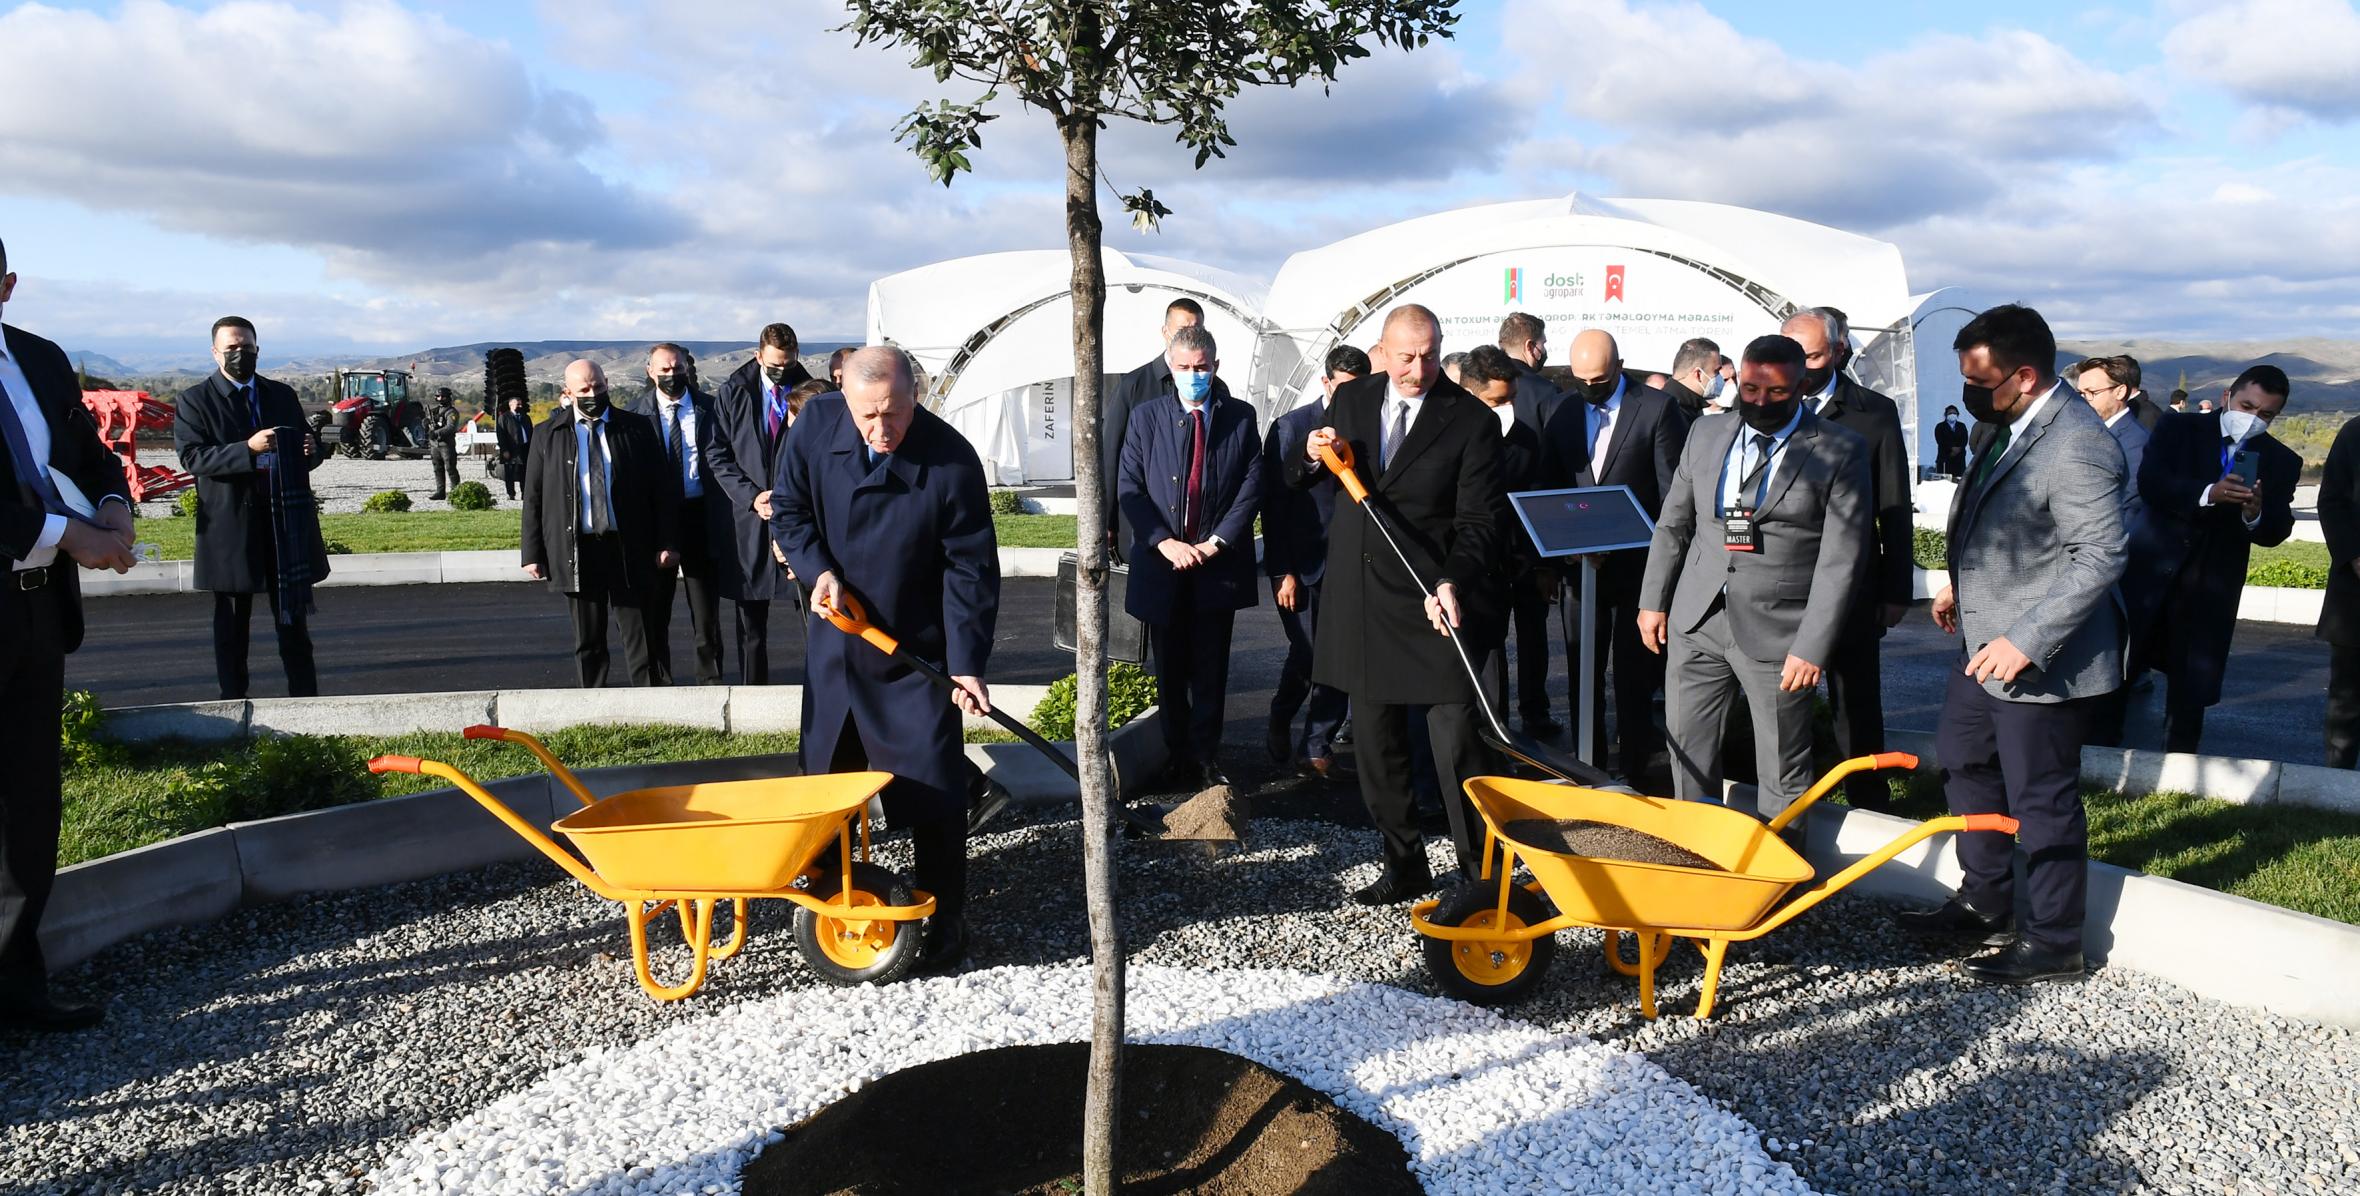 Ilham Aliyev and President of the Republic of Turkey Recep Tayyip Erdogan laid a foundation stone for “Dost Agropark” in Zangilan district